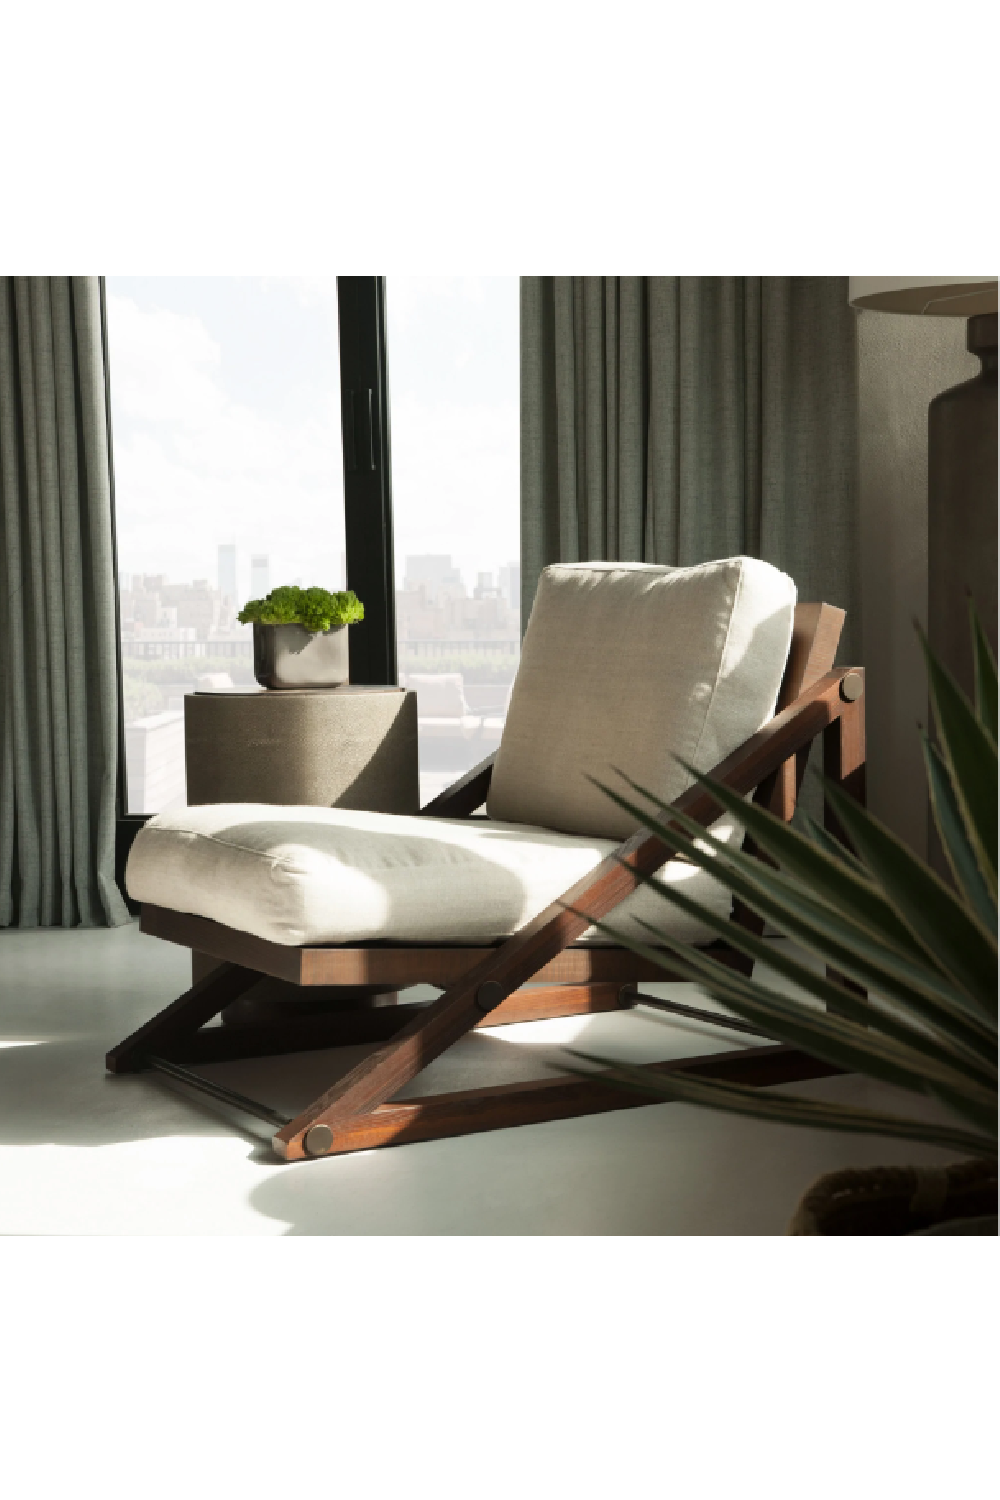 Leather Wood Framed Chair | Andrew Martin Teddy | OROA.com